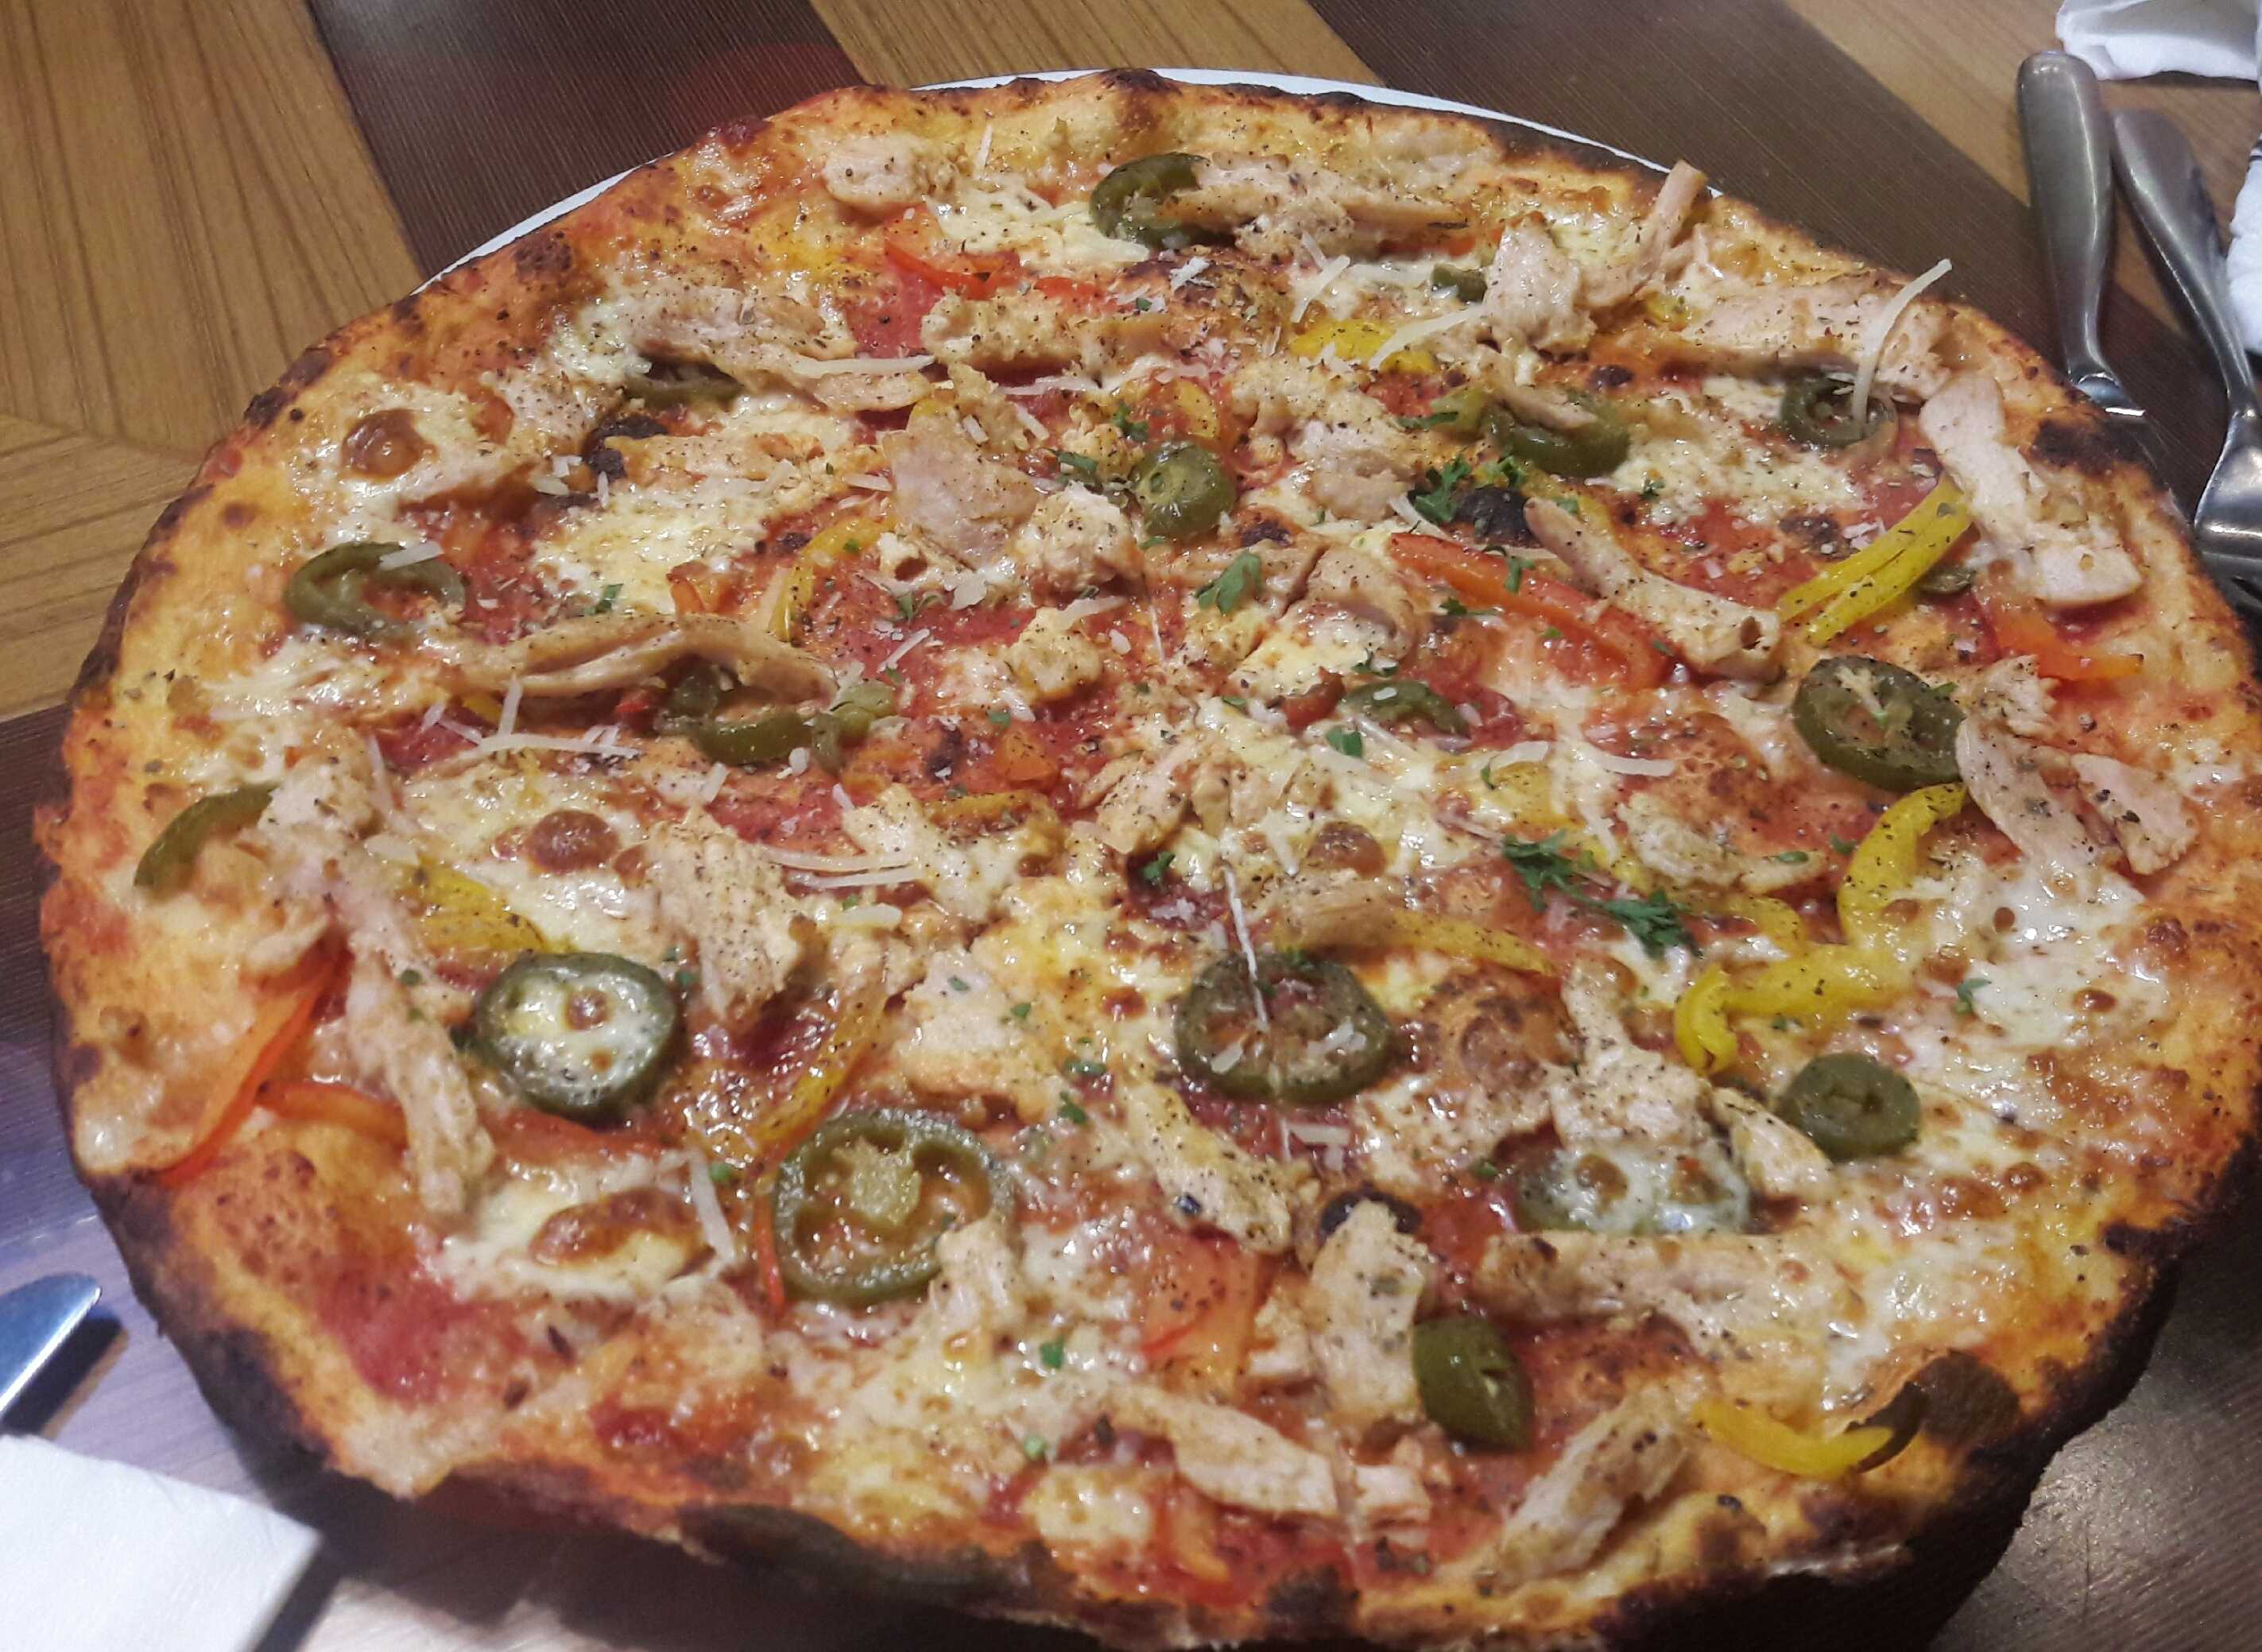 Giardiniera pizza-ridhi chhabra-fnbworld